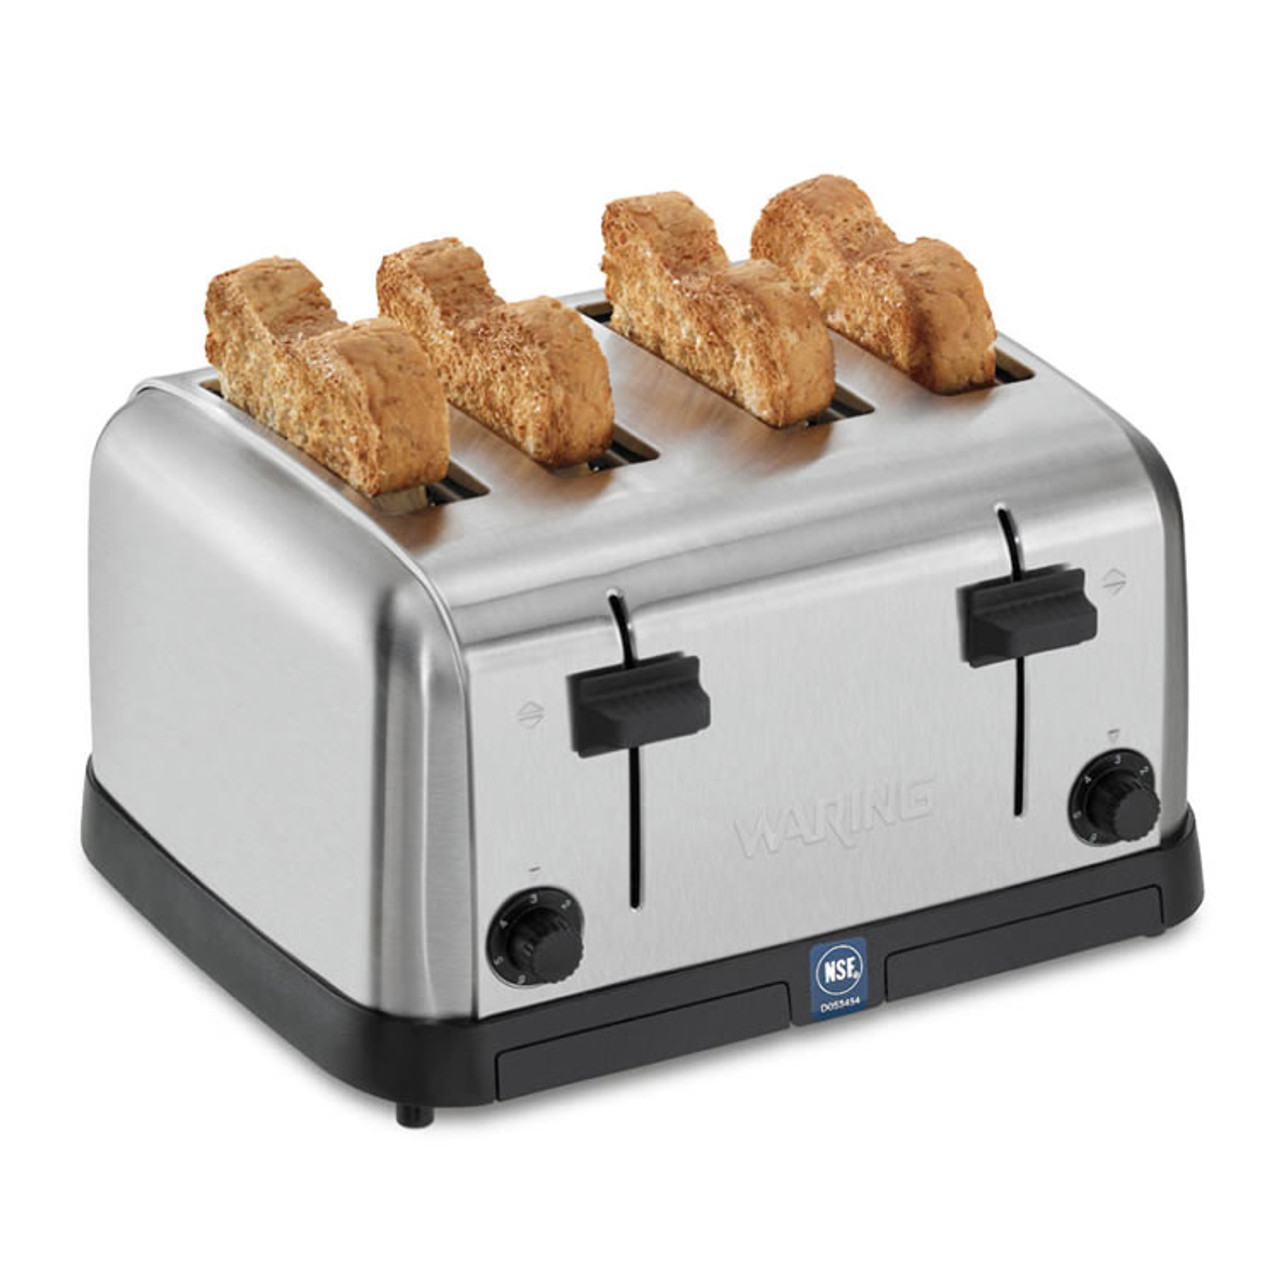 Waring WCT708 Toaster 4 Slice Wide Slot